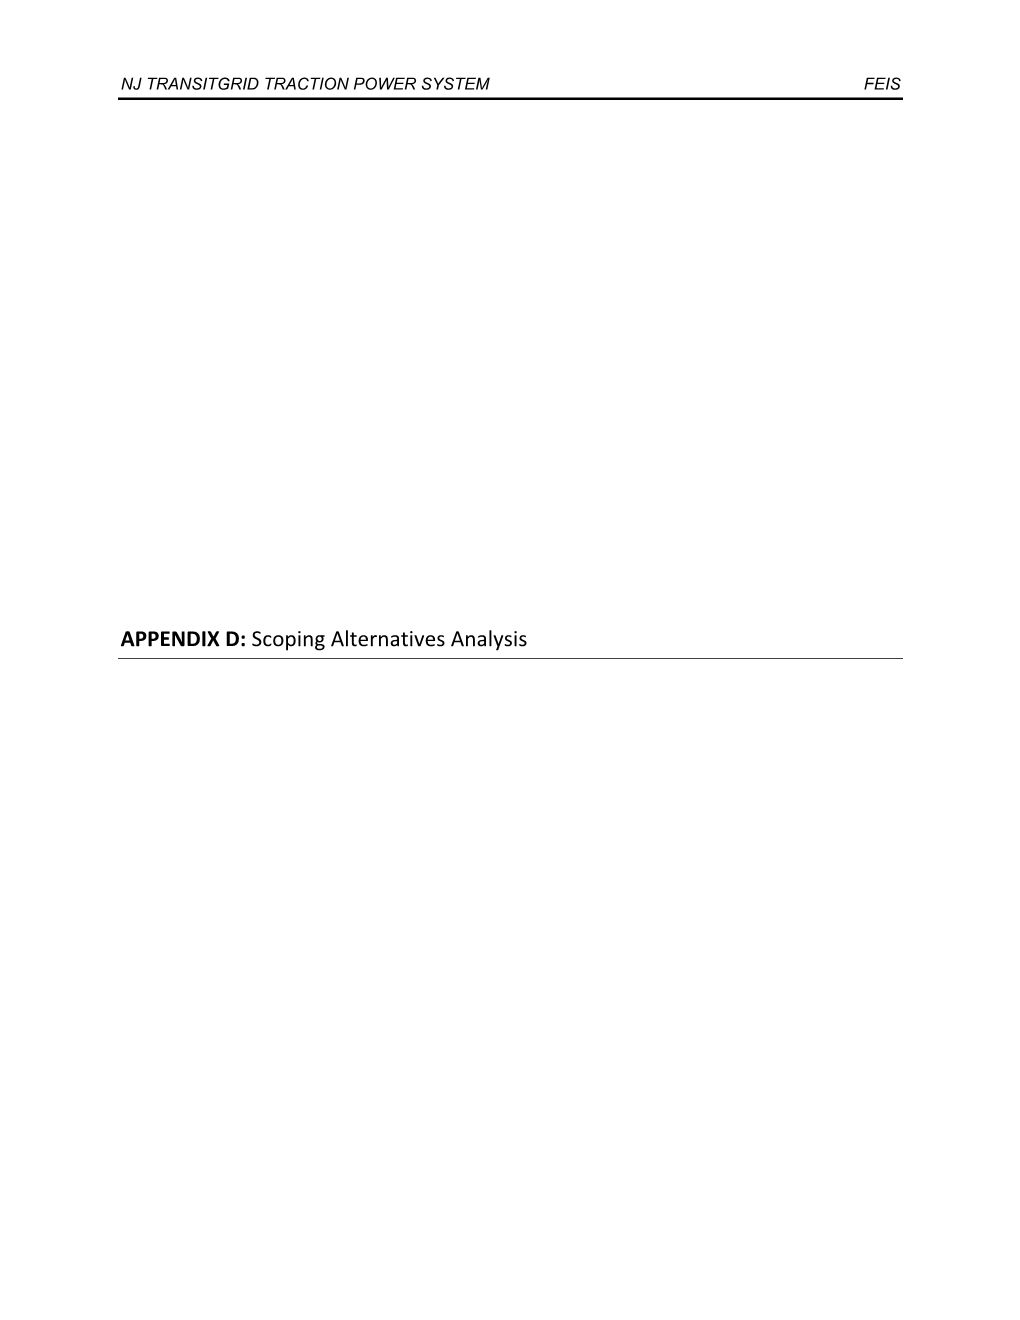 APPENDIX D: Scoping Alternatives Analysis NJ TRANSITGRID TRACTION POWER SYSTEM Appendix D – Scoping Alternatives Analysis